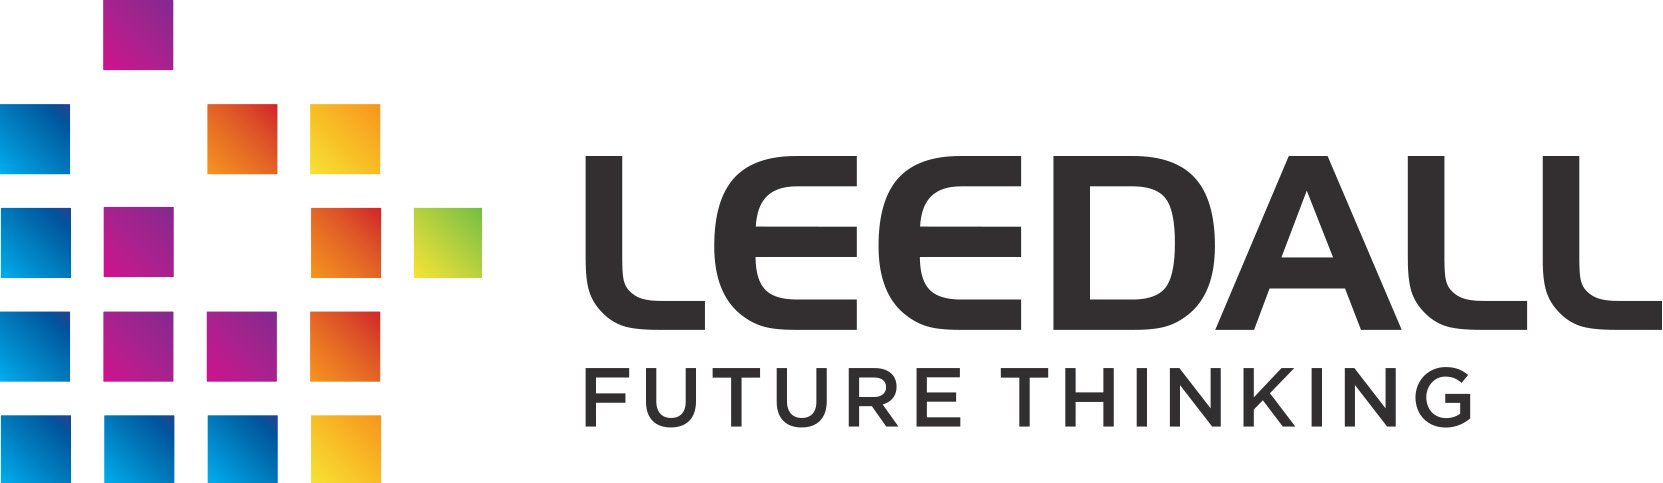 Leedall Logo Colour